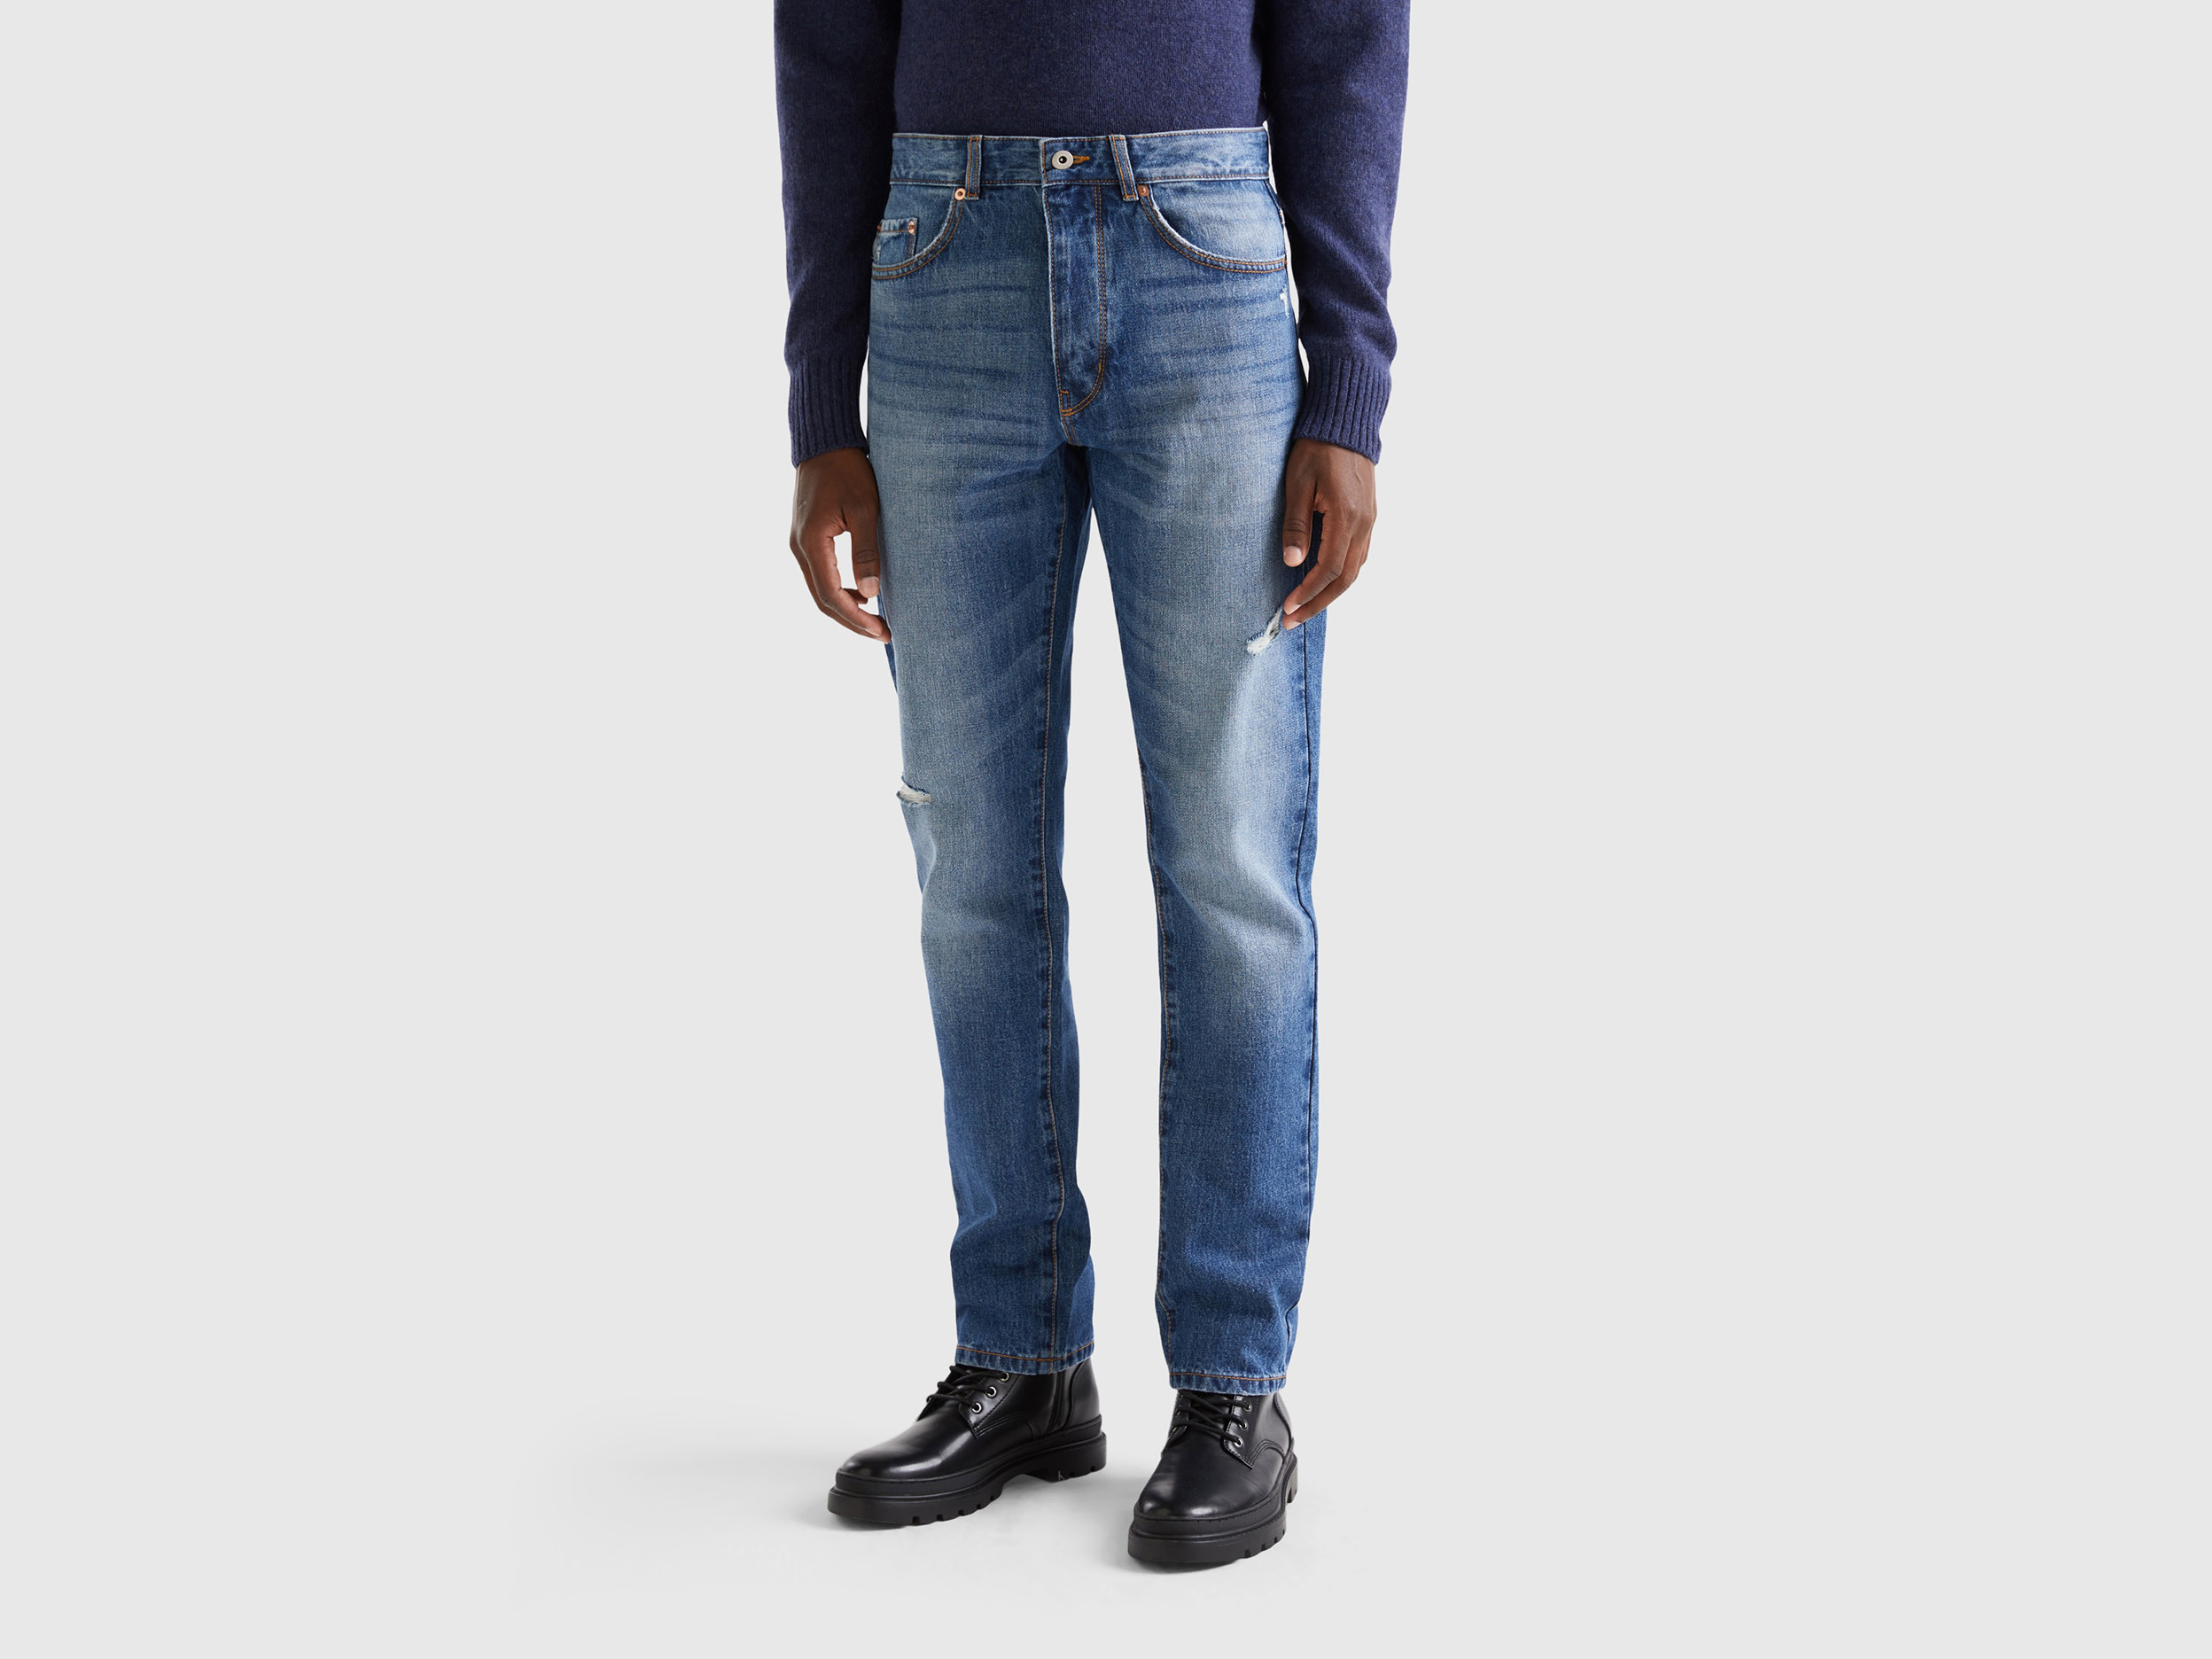 Benetton, Straight Leg Jeans With Tears, size 30, Light Blue, Men